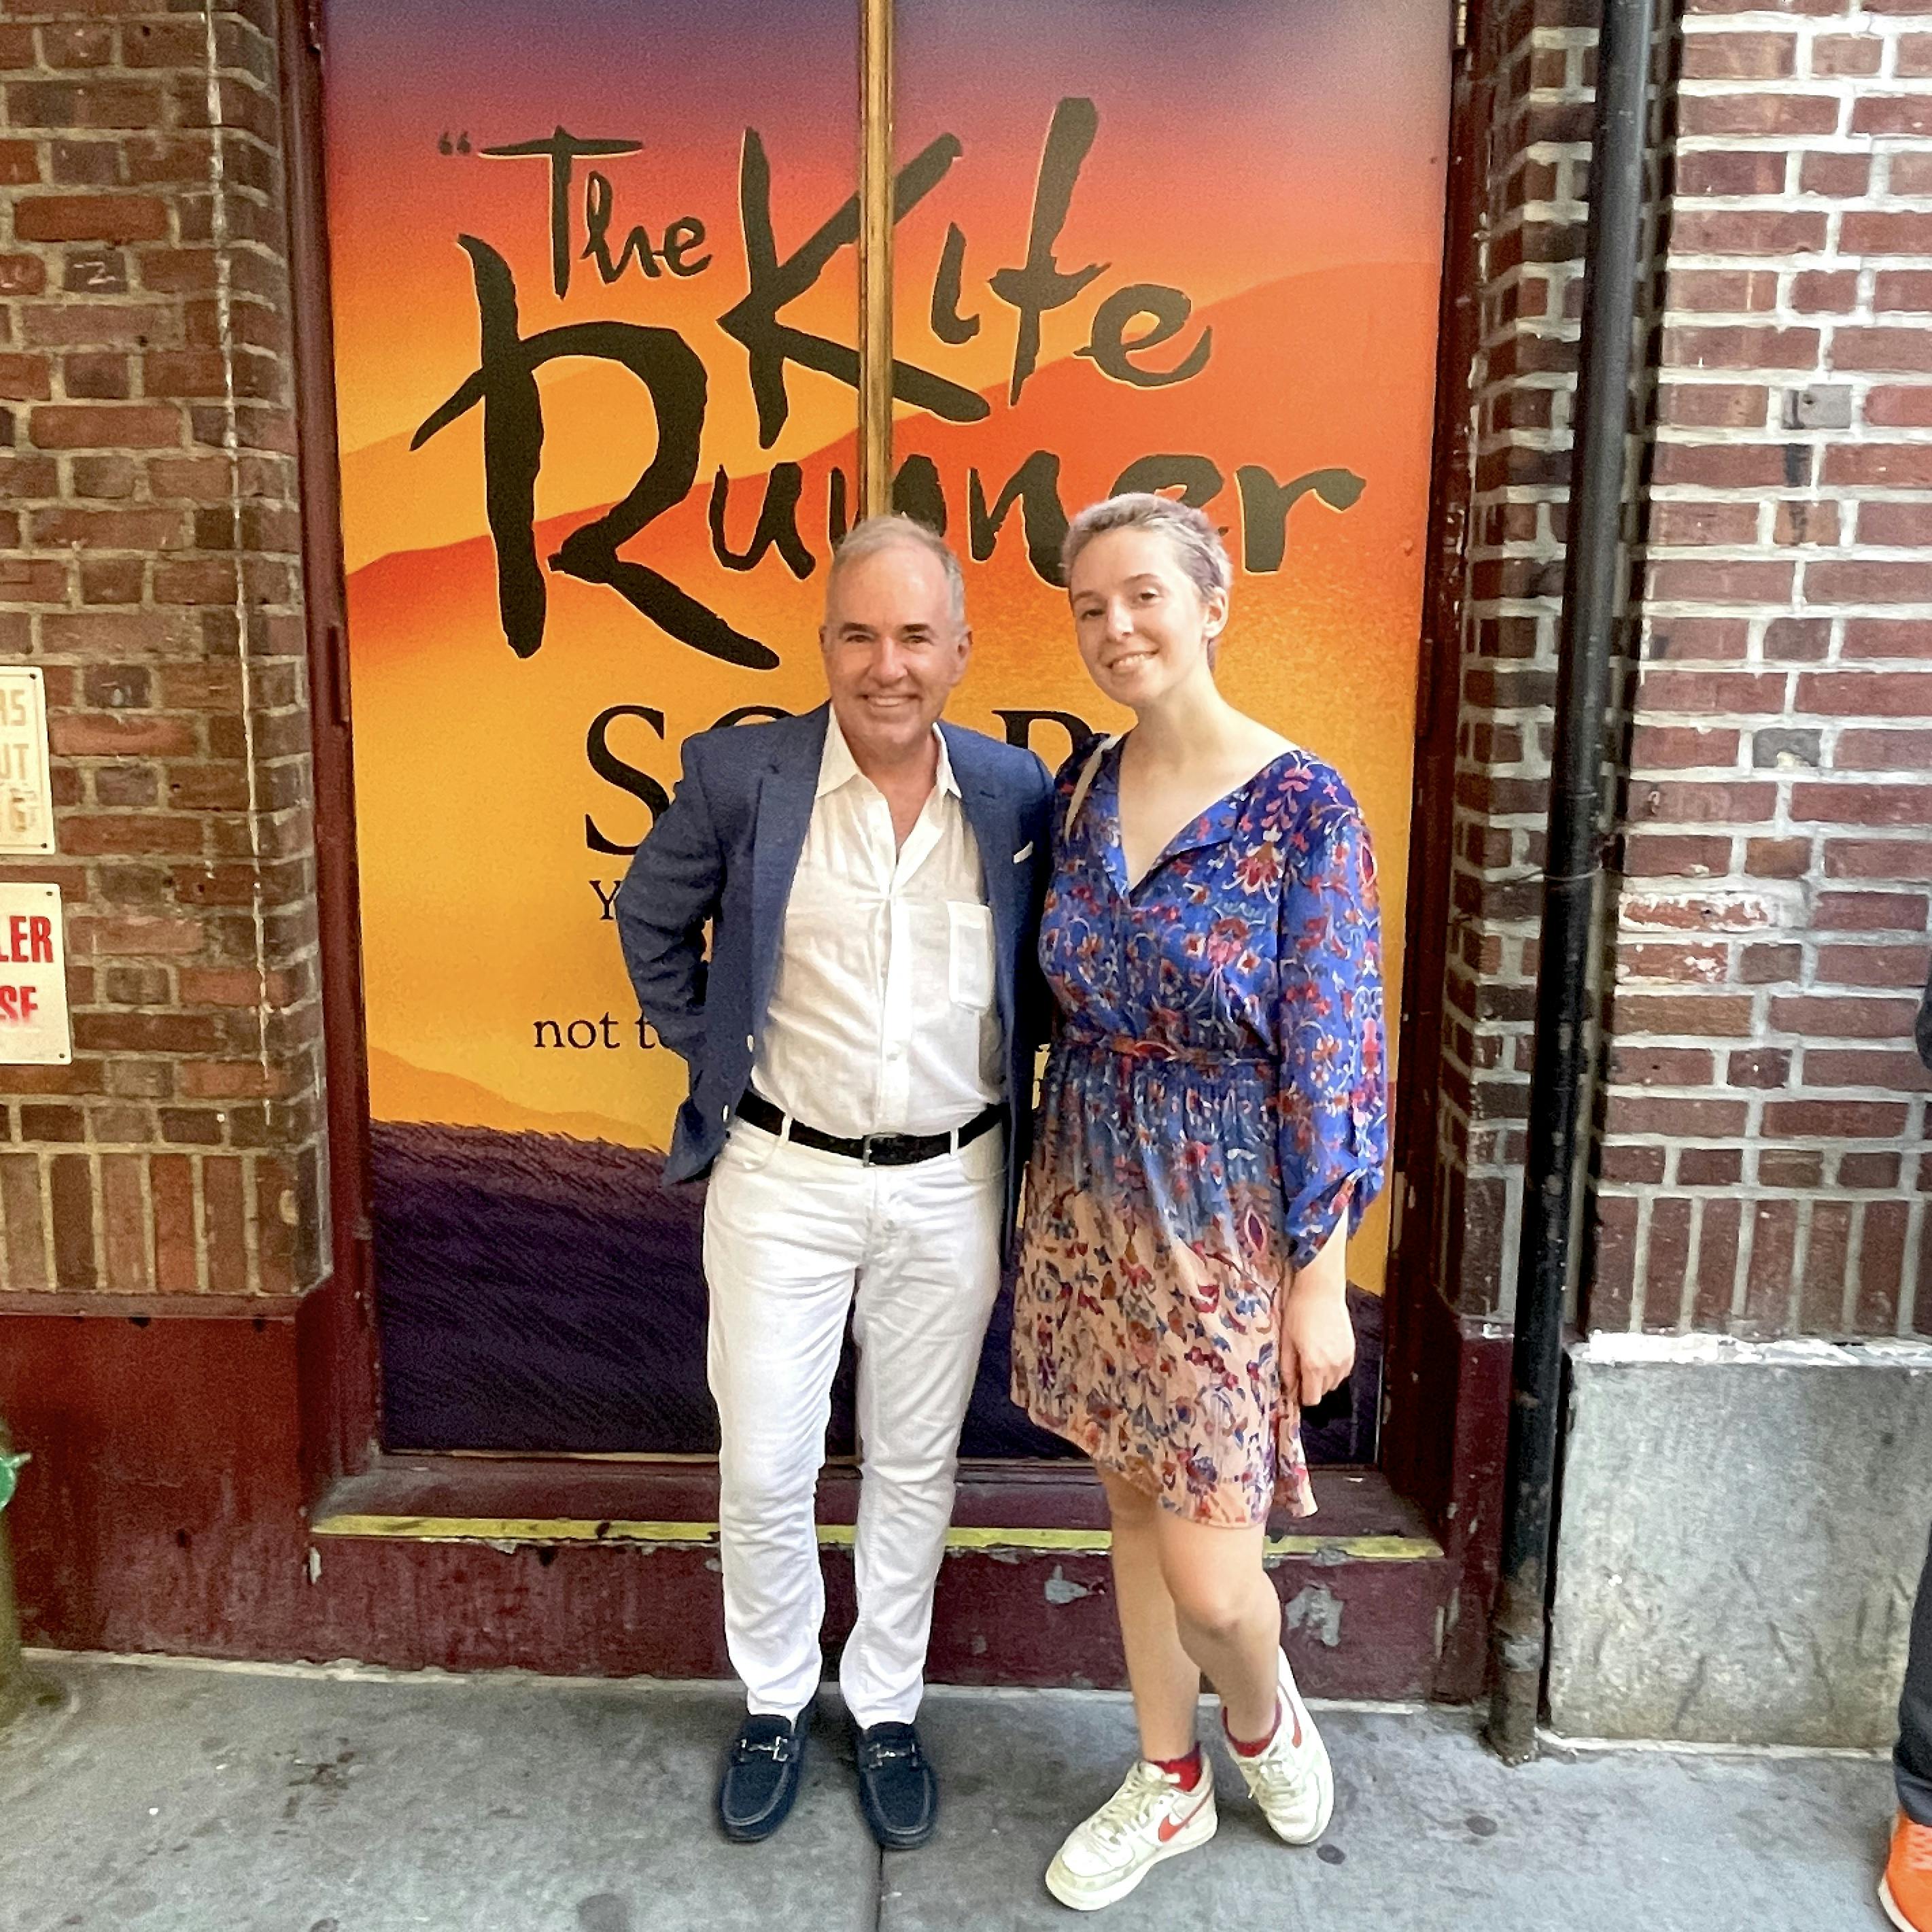 The Kite Runner Broadway Opening Night - Stephen Flaherty and Madeline Katz